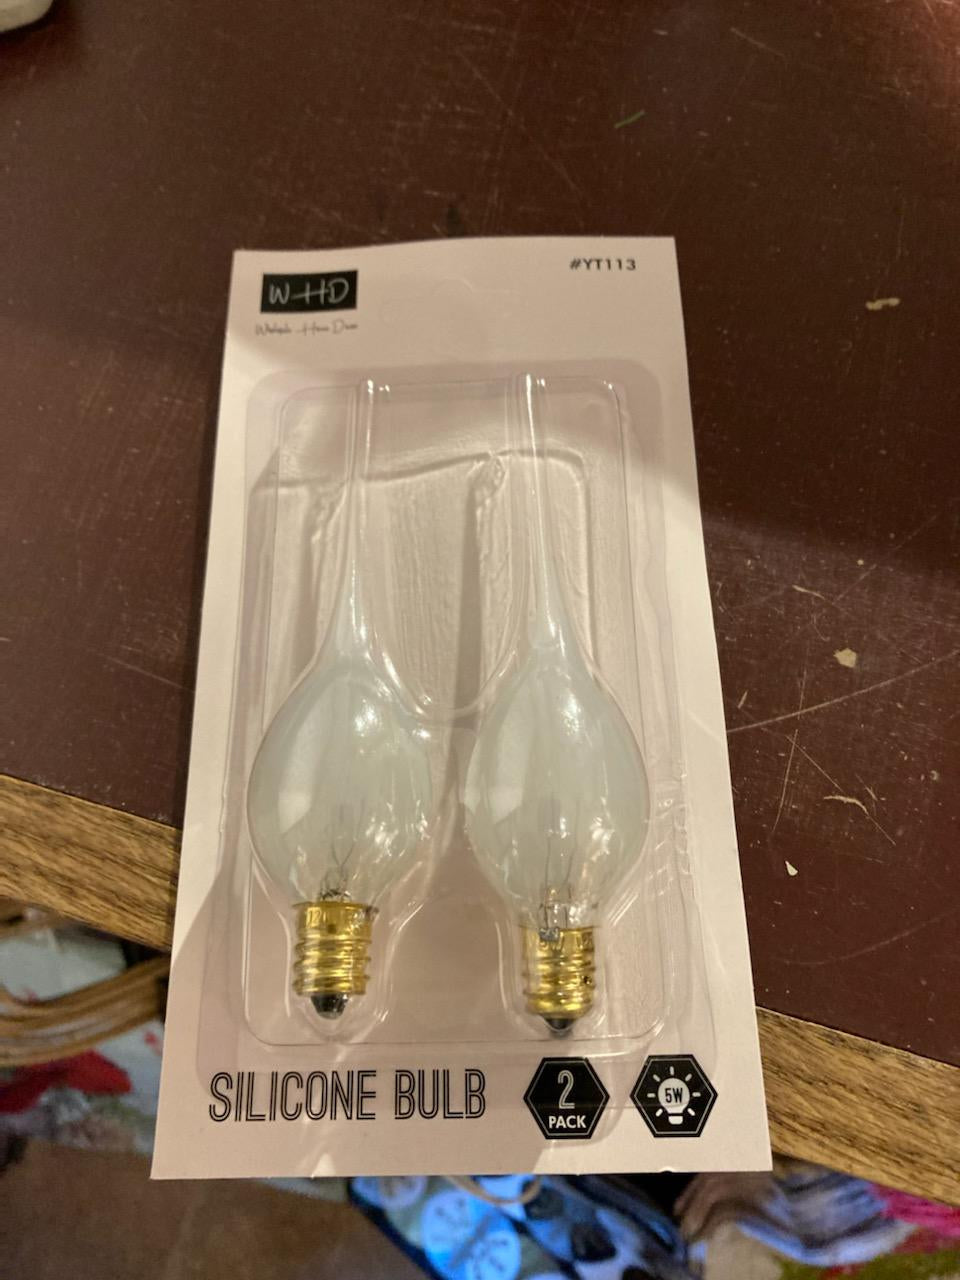 Silicone bulb - 2 pck - 5 Watt